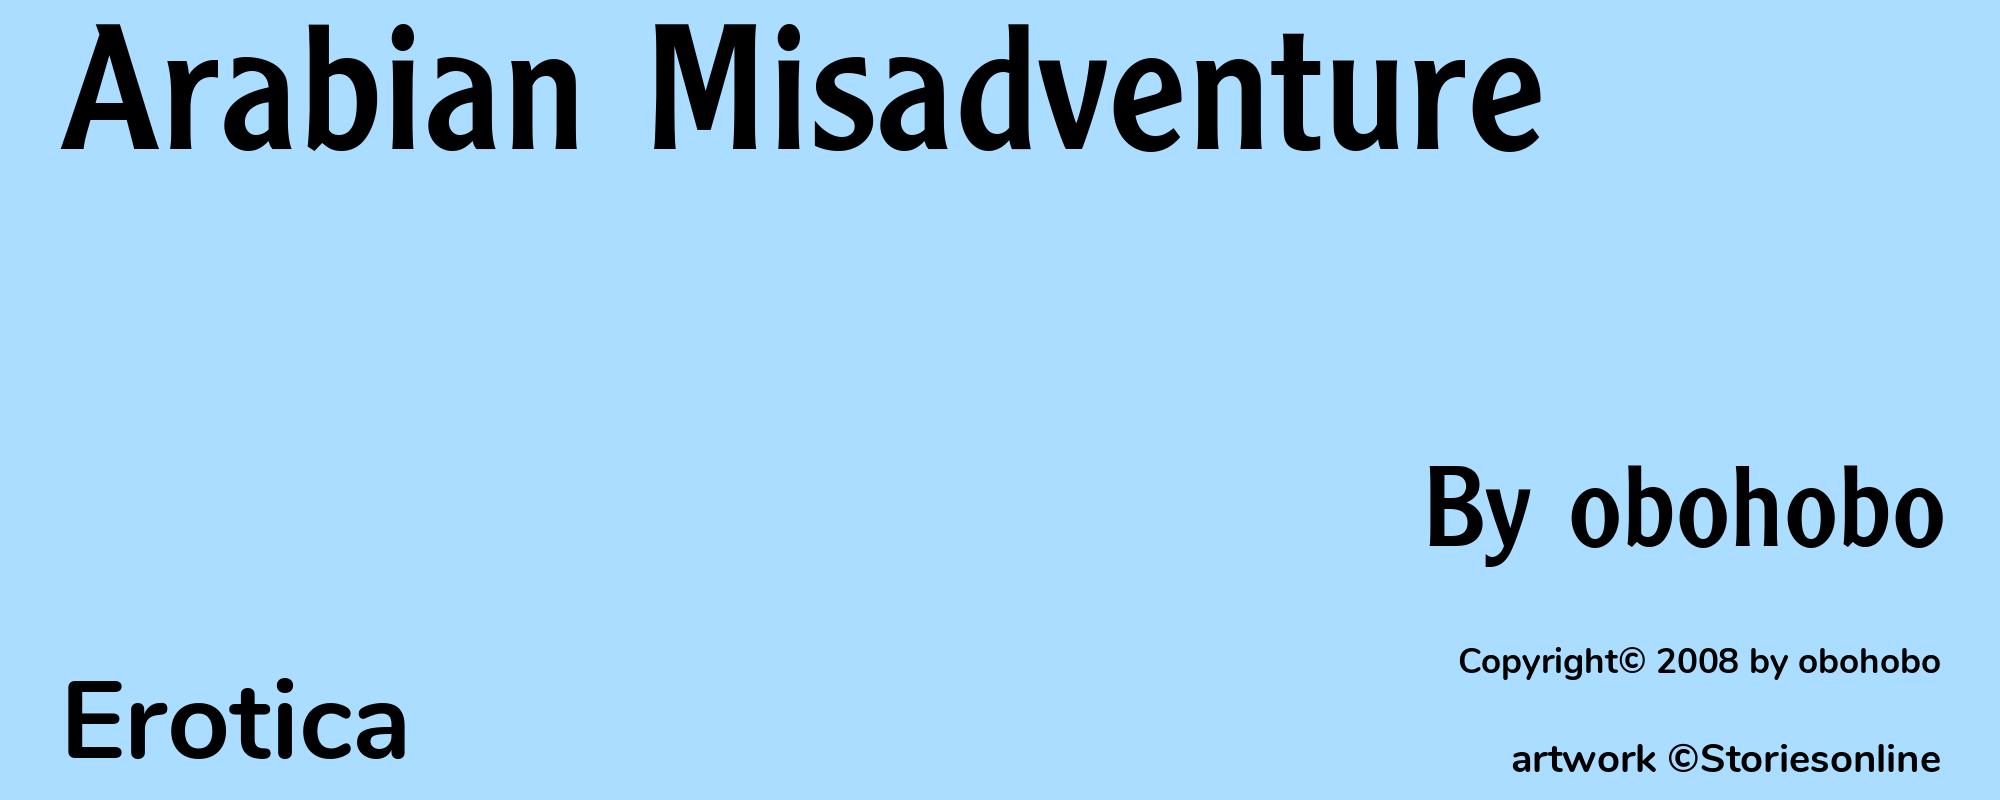 Arabian Misadventure - Cover